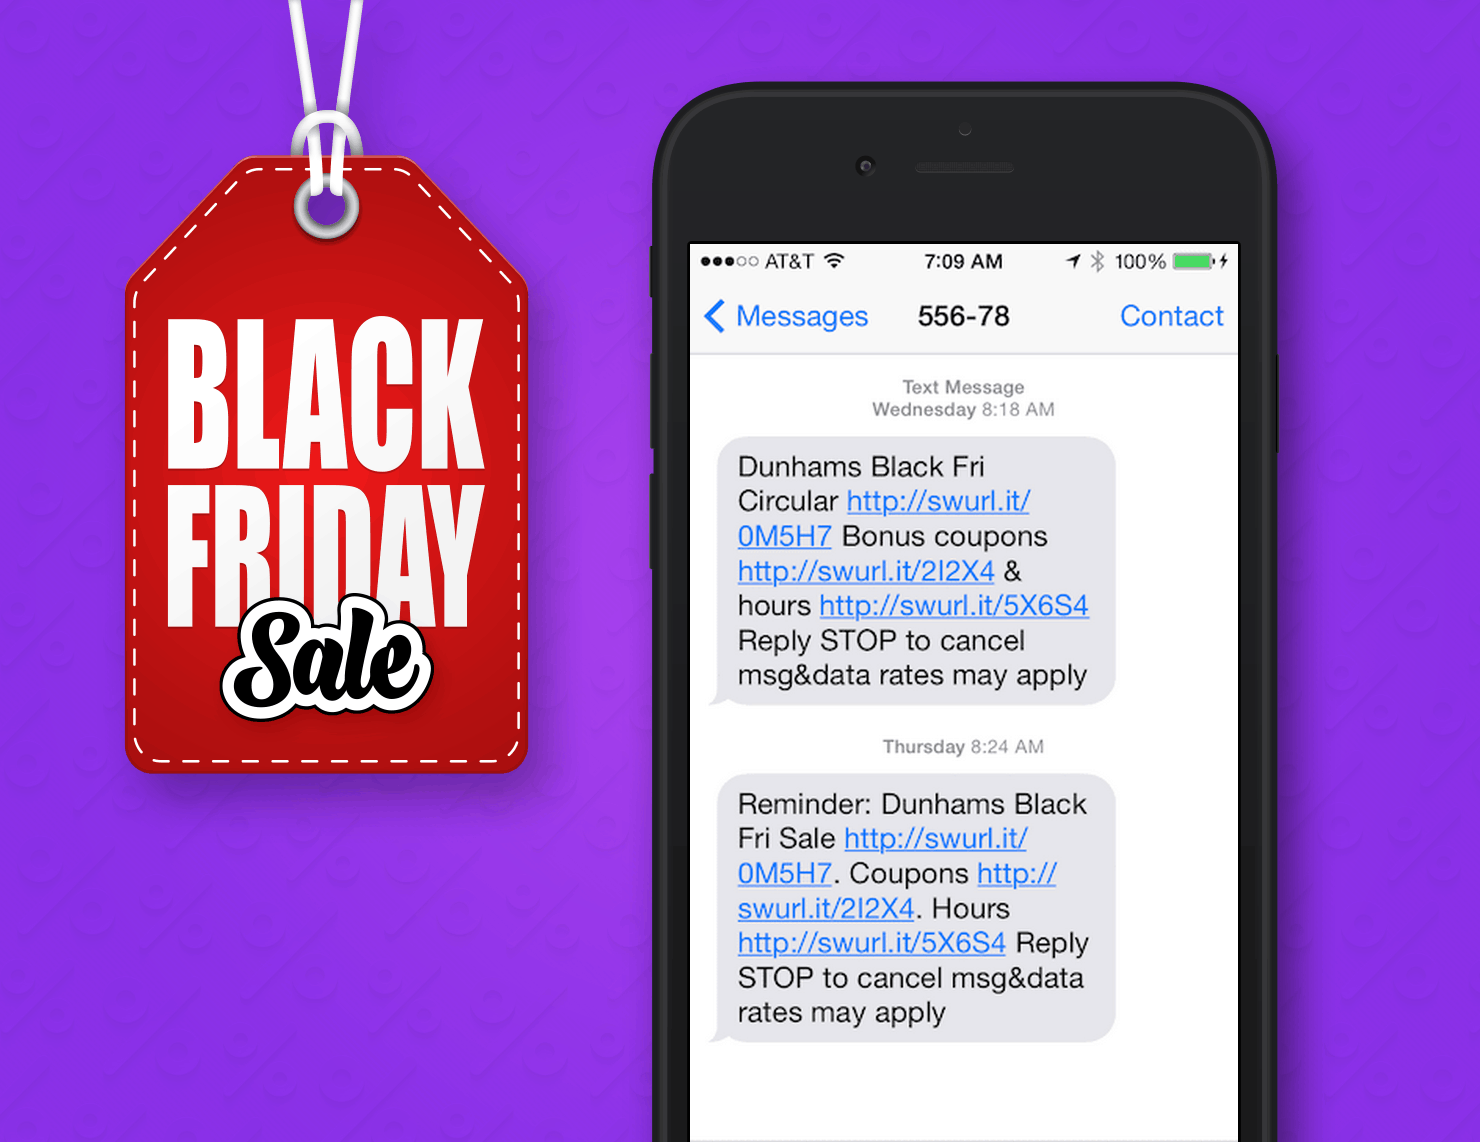 Black Friday SMS Marketing Example From Dunhams